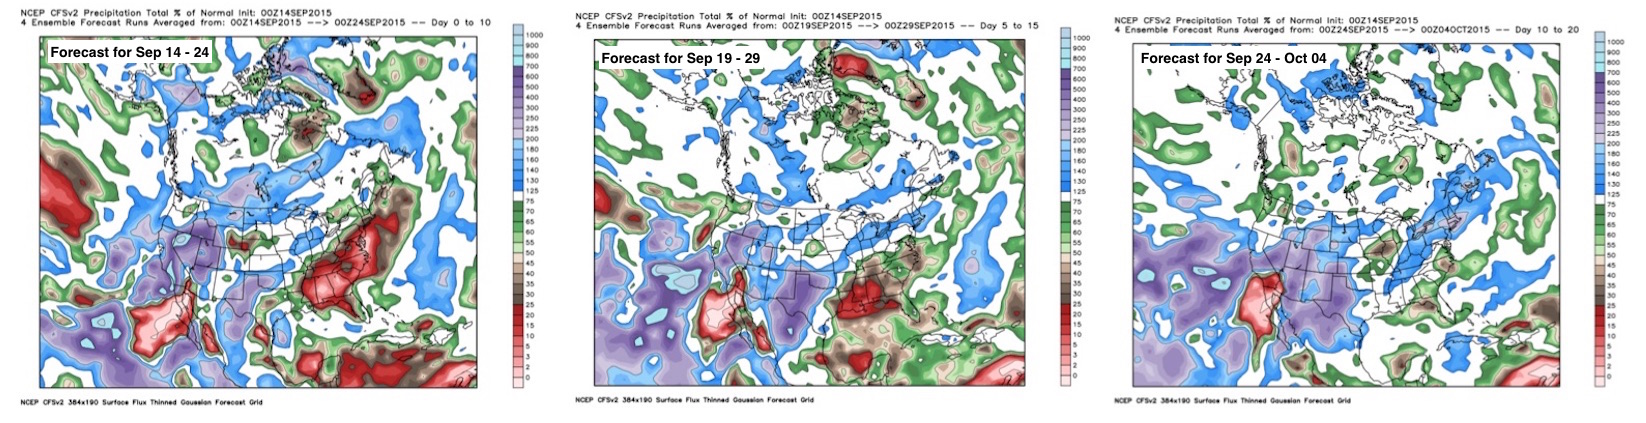 CFSv2 Precipitation forecast percent of normal | WeatherBell Analytics